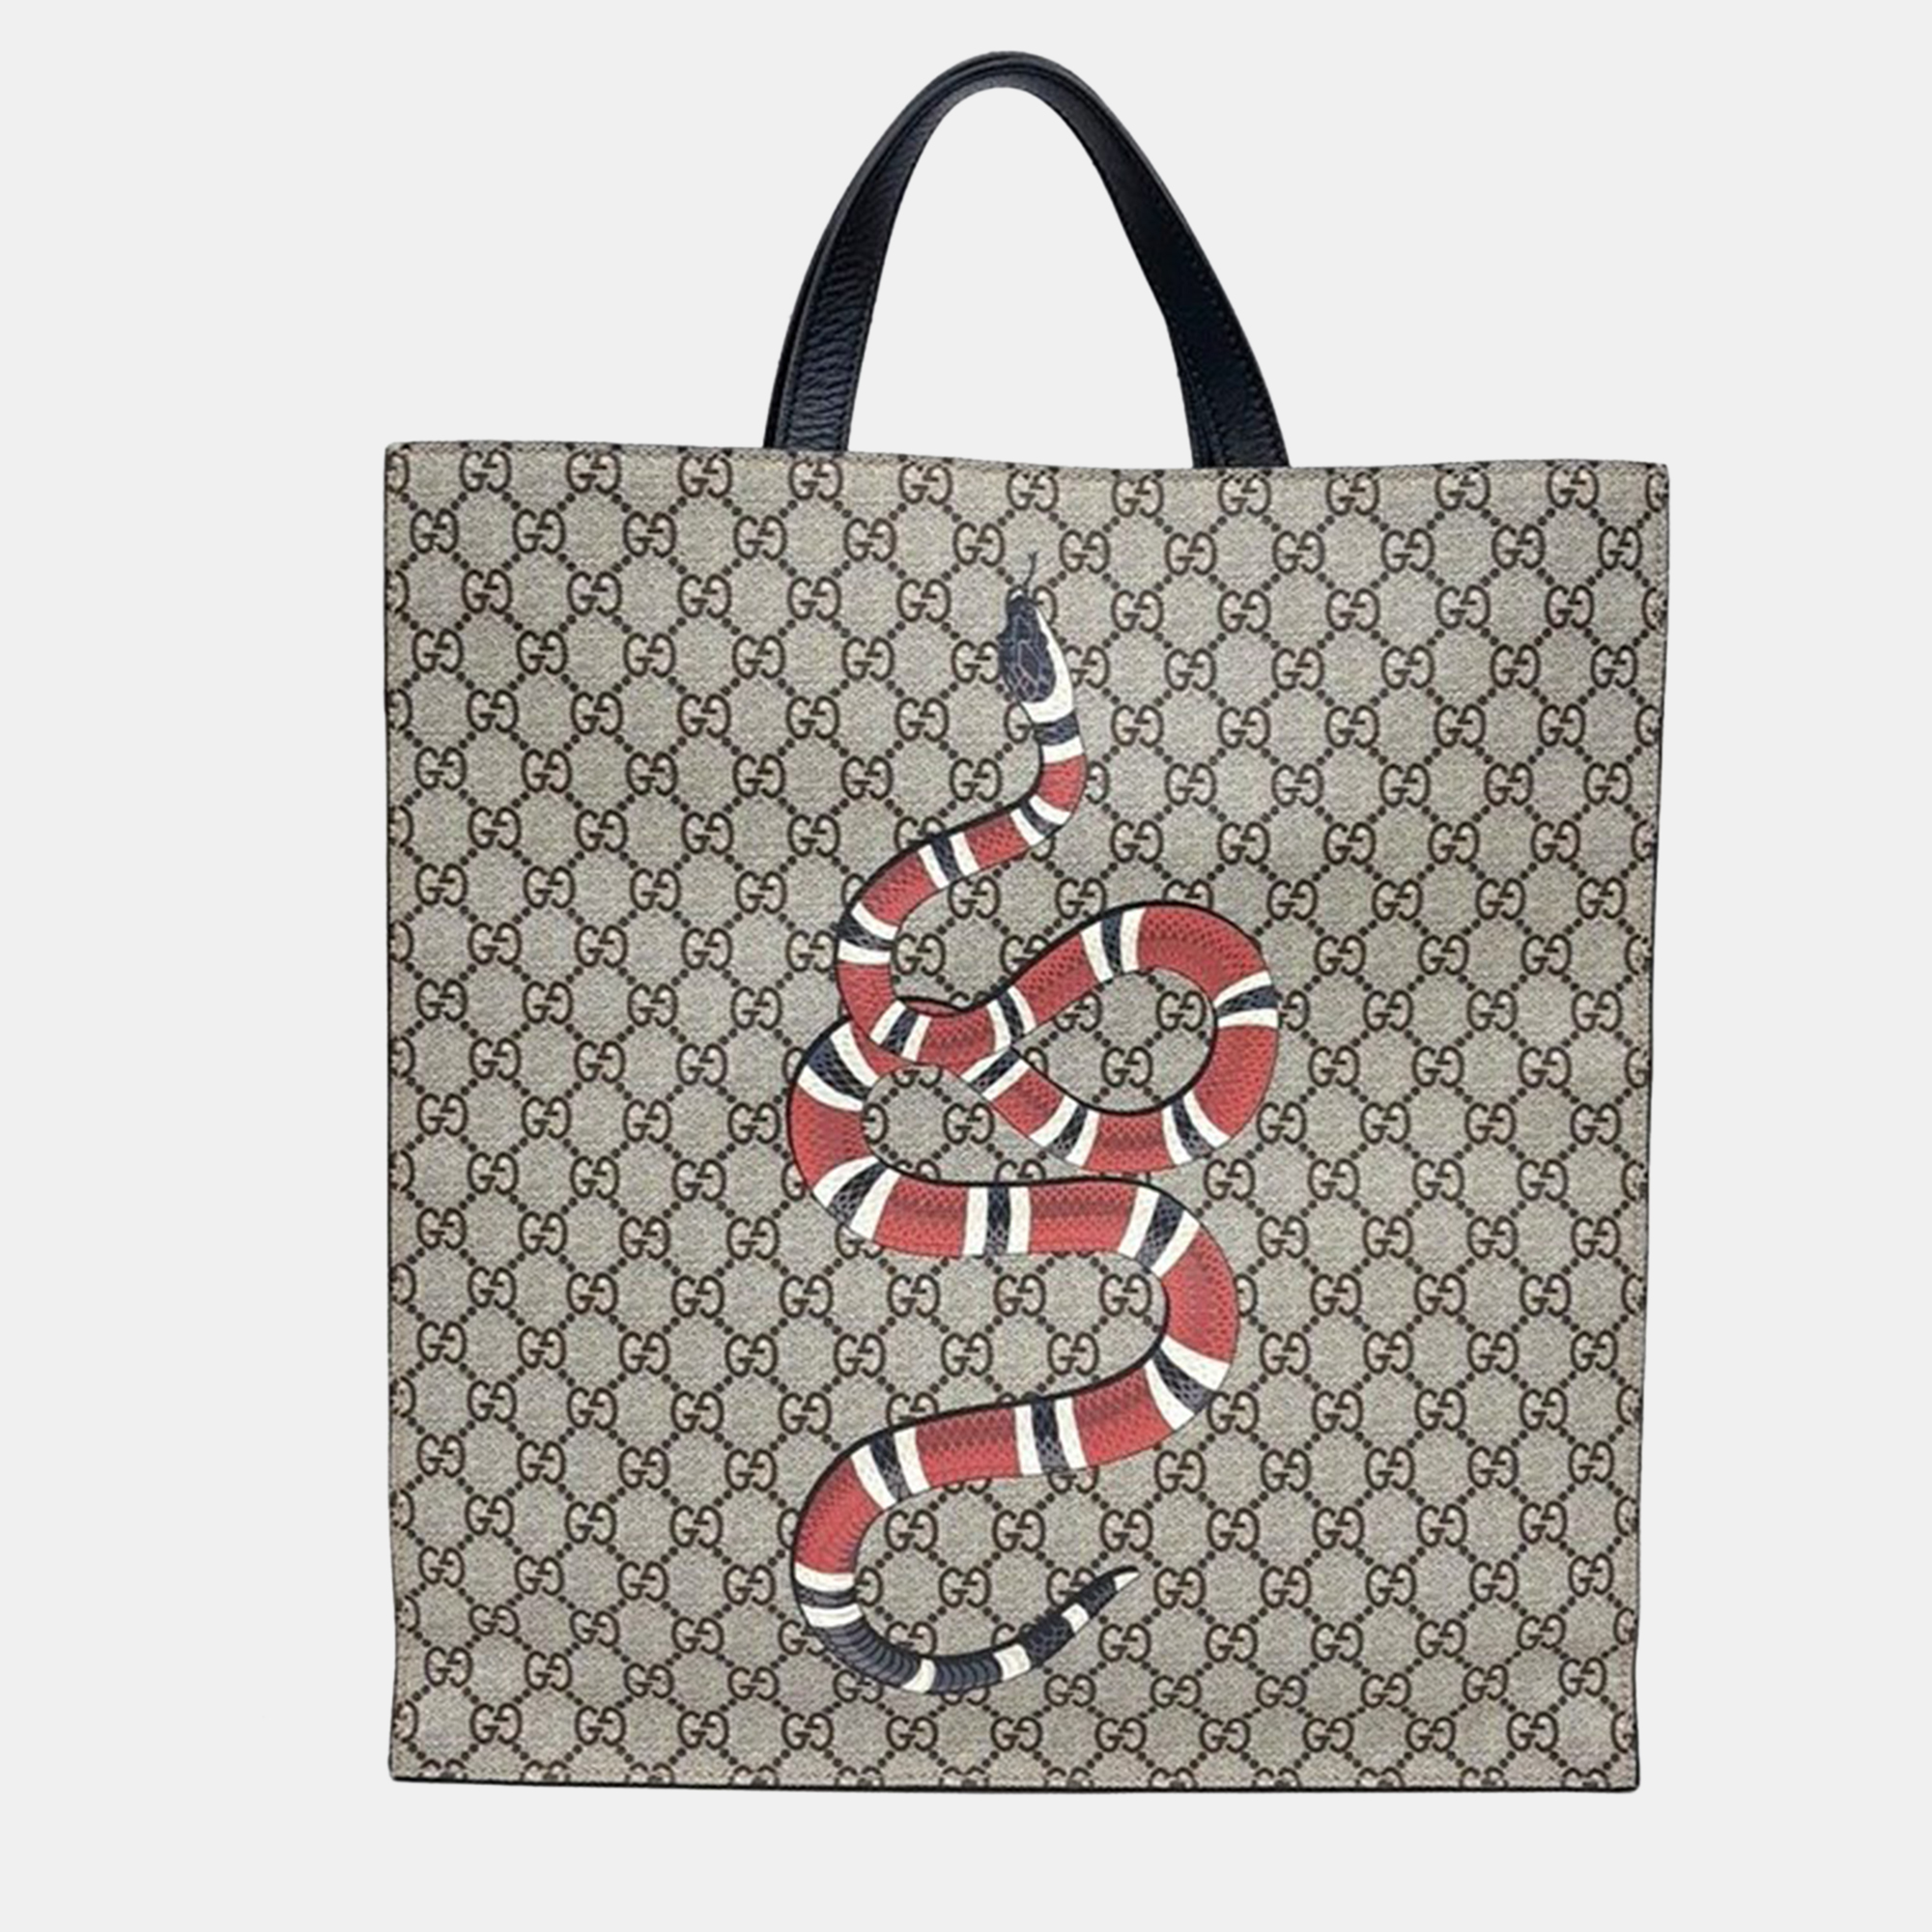 Gucci snake gg supreme tote and shoulder bag